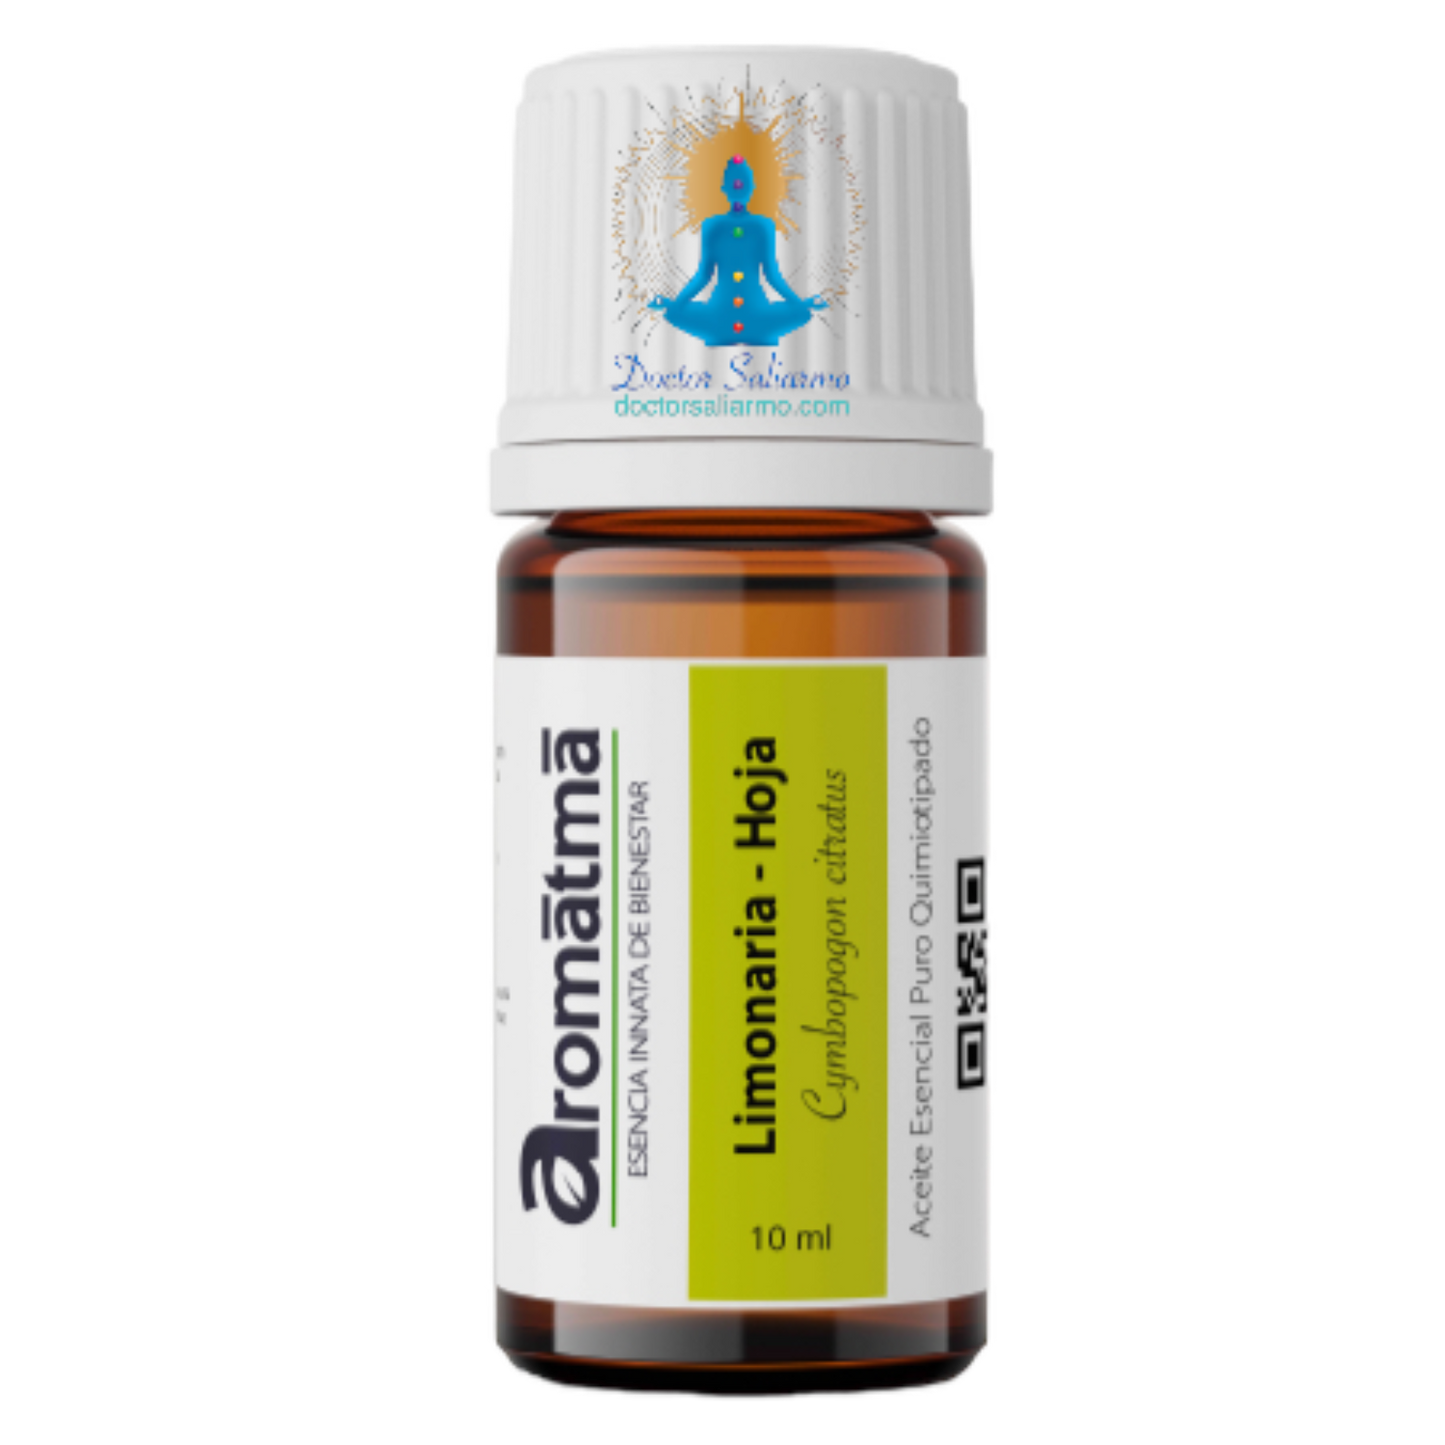 LEMONARIA ESSENTIAL OIL: Stimulant and natural analgesic